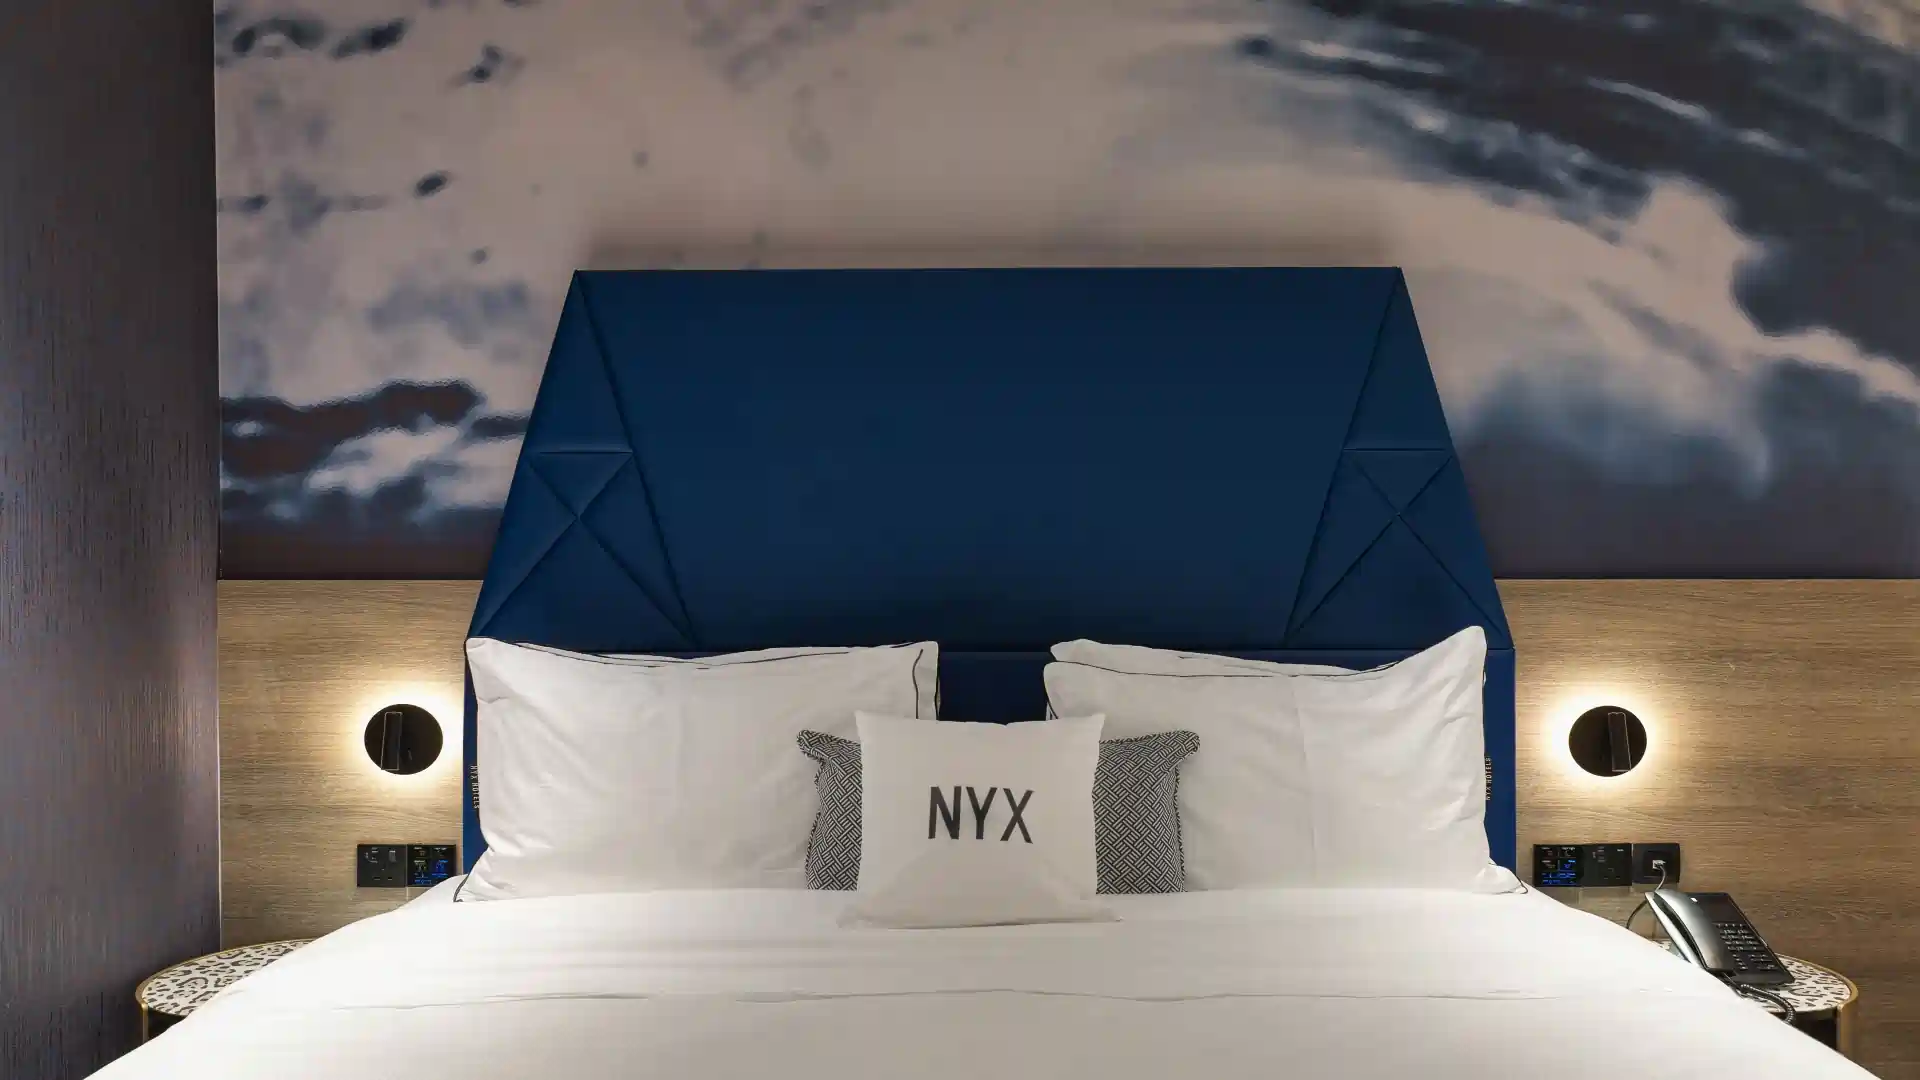 NYX Hotels - spaceExecutiveRoom_01.webp